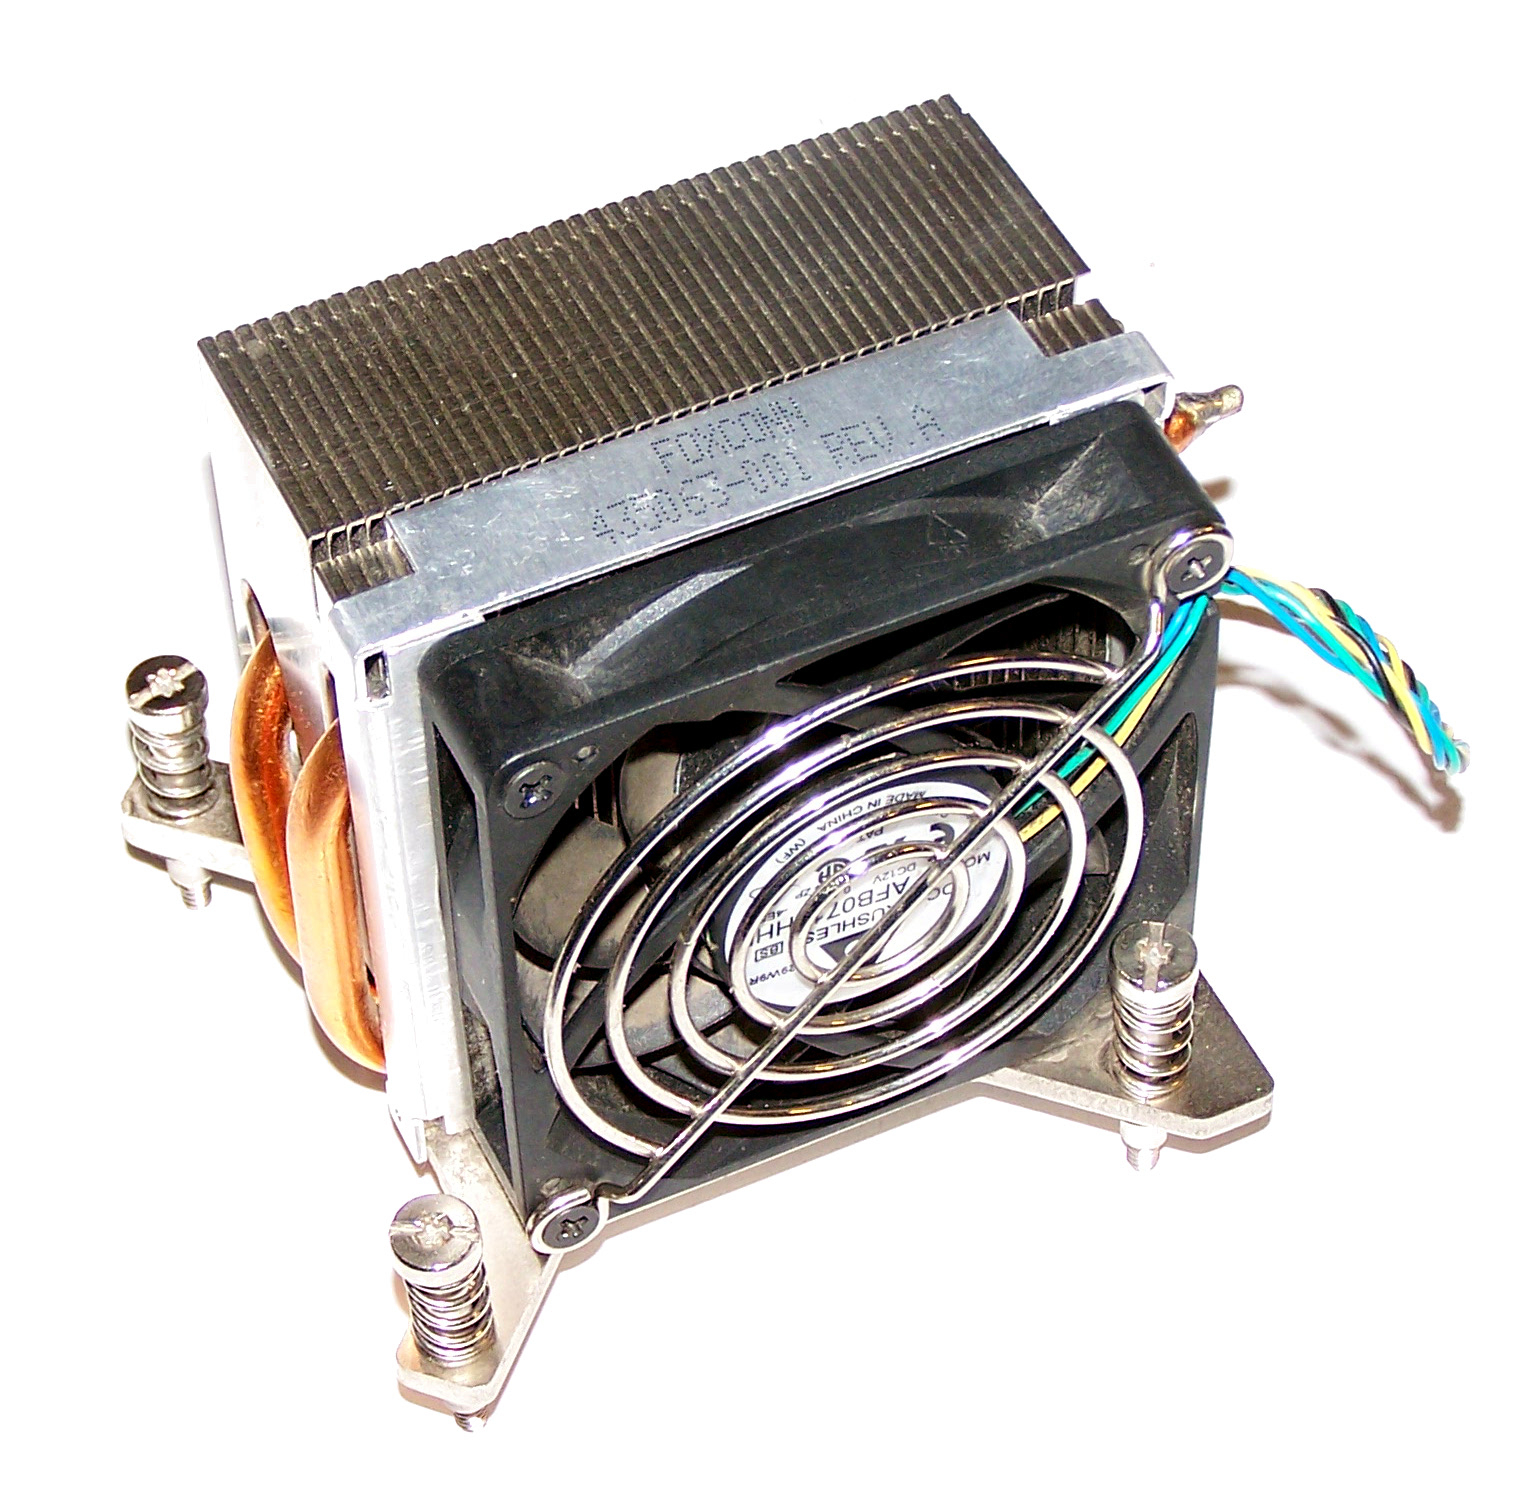 Hp 435063 001 Dc7700 Sff Small Form Factor Lga775 Processor Heatsink And Fan inside dimensions 1532 X 1512